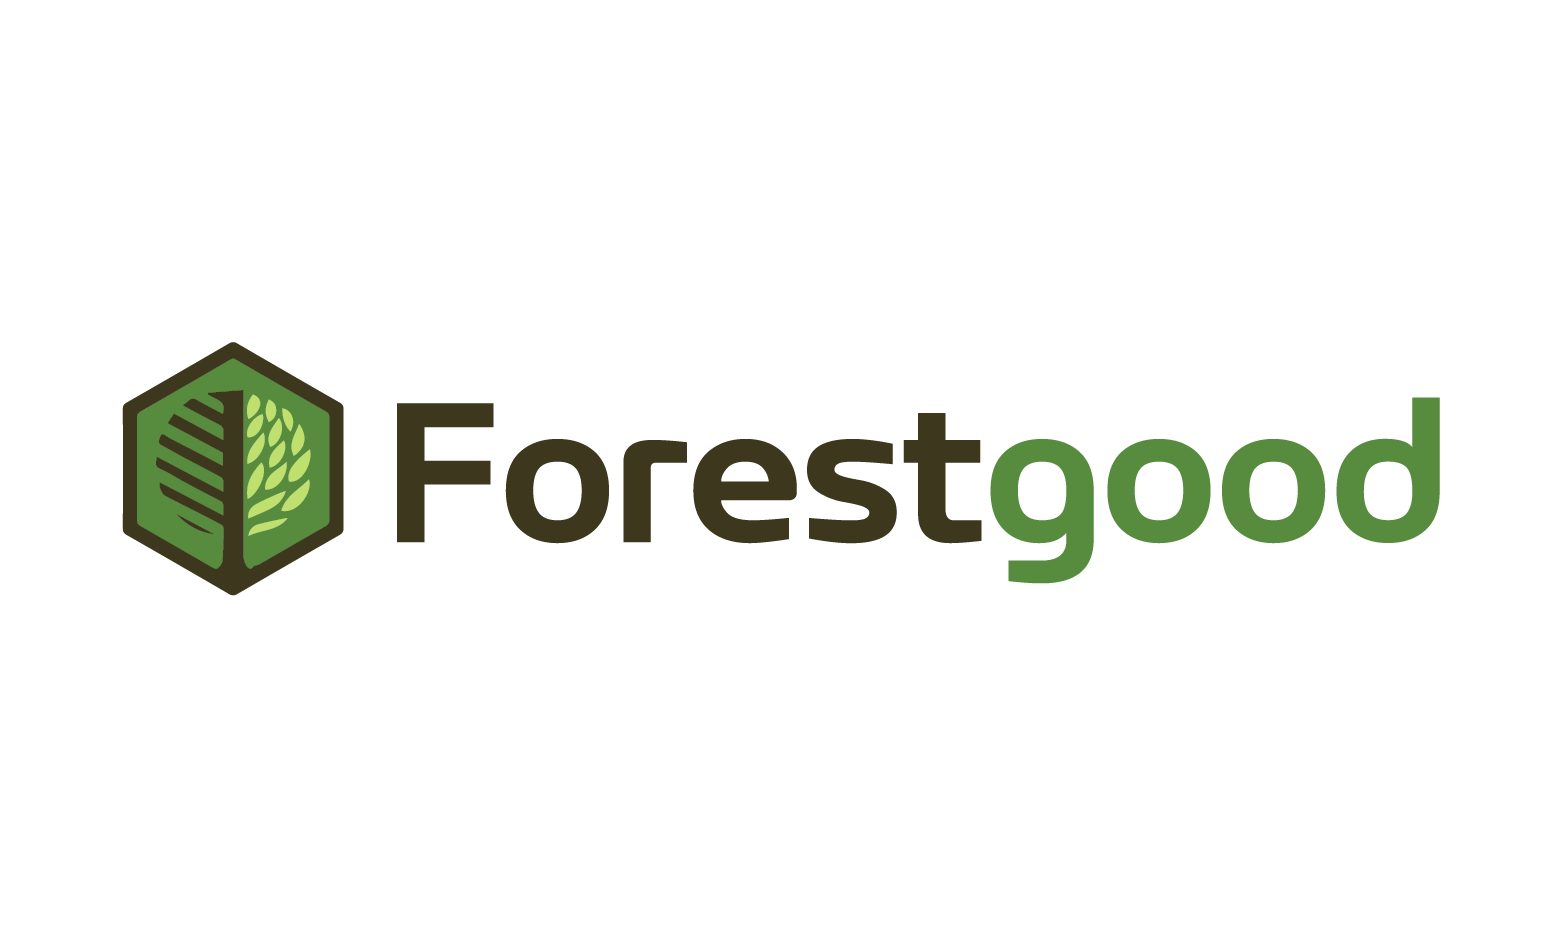 ForestGood.com - Creative brandable domain for sale